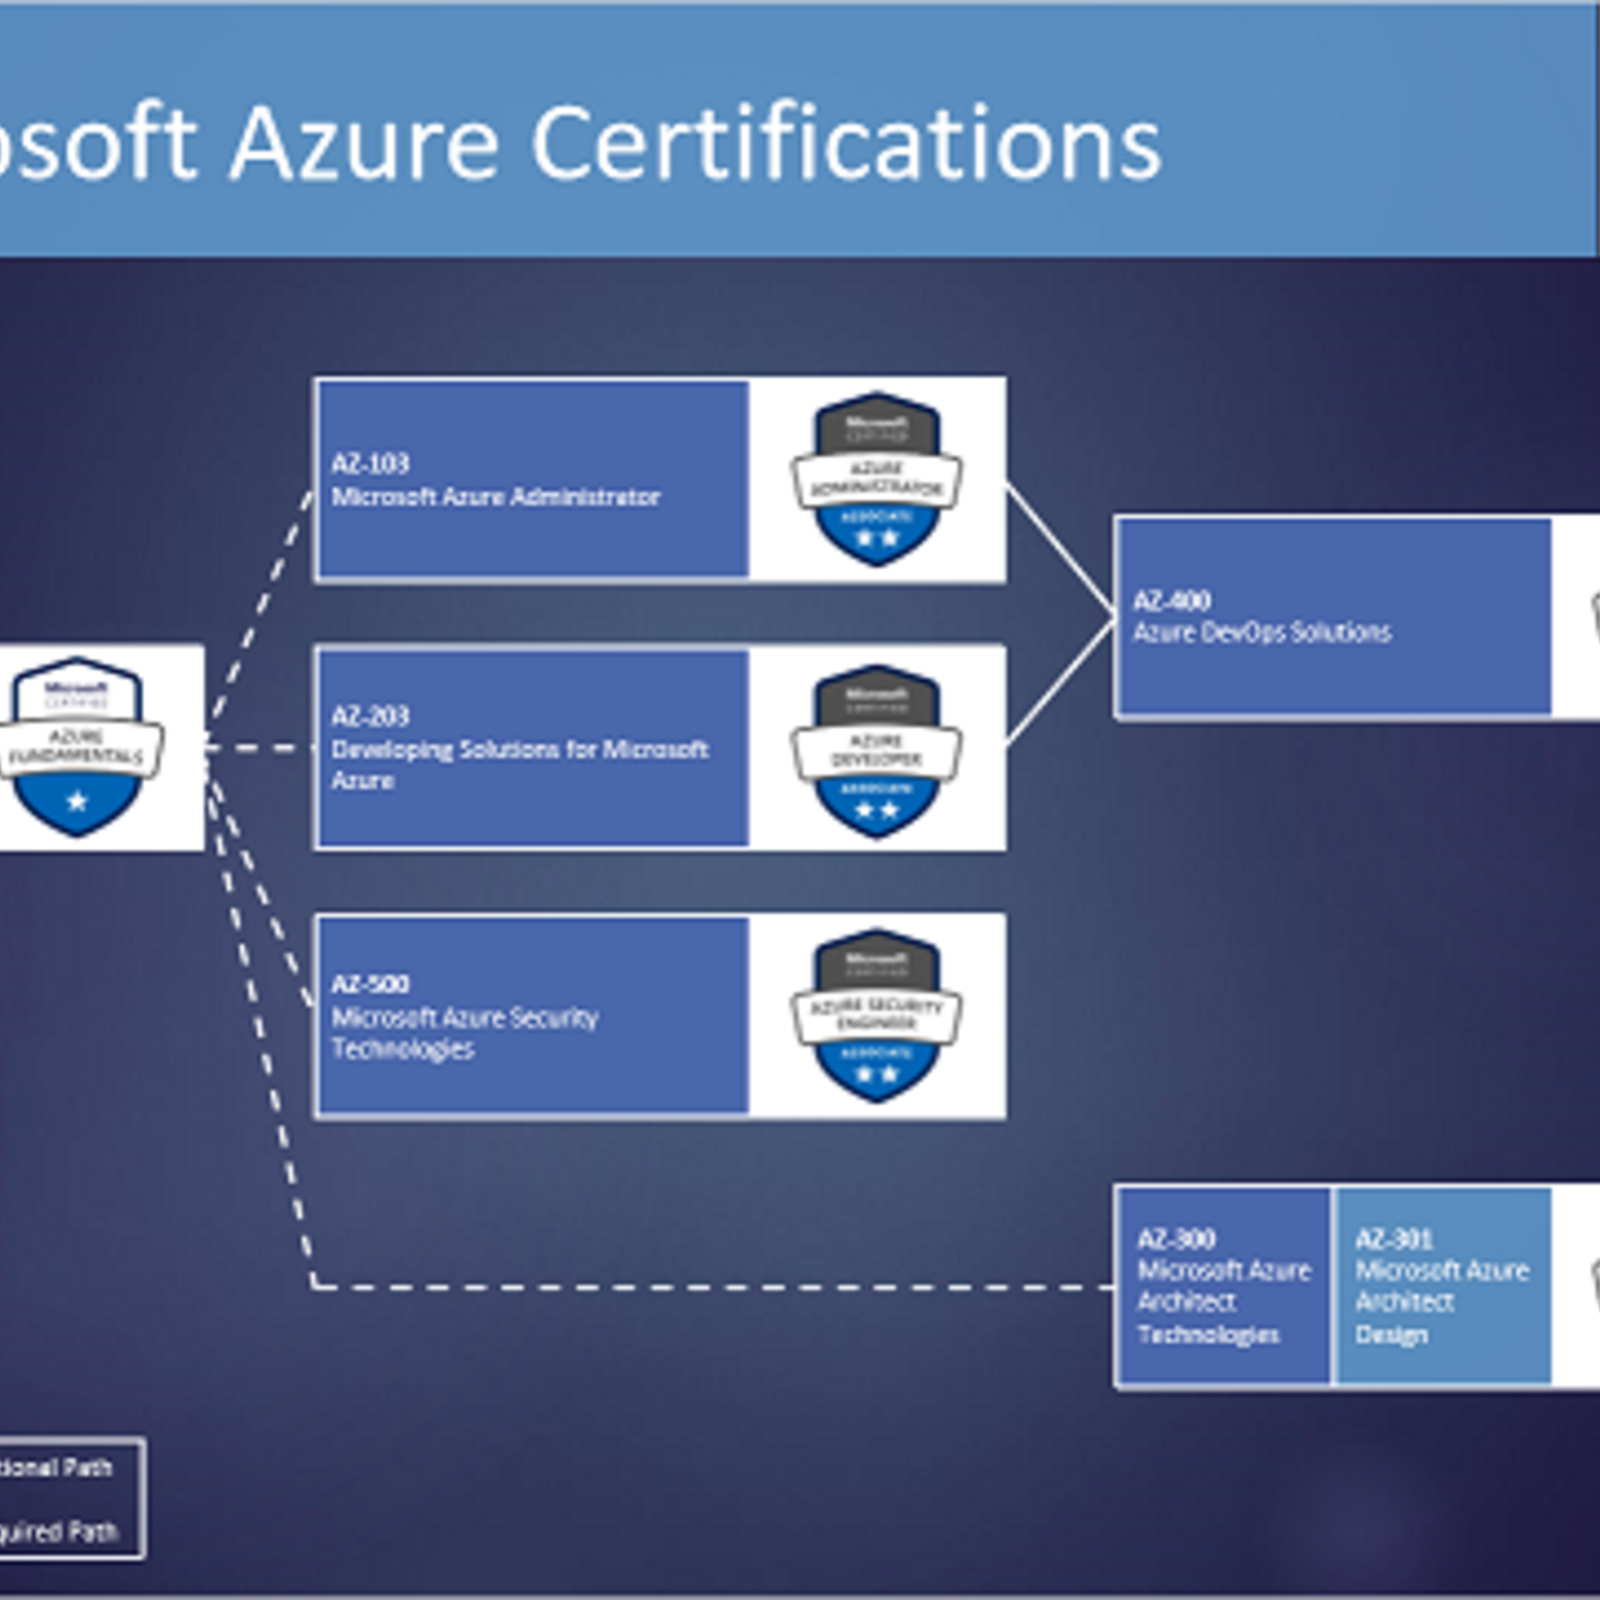 Microsoft Azure AZ-300 Microsoft Azure Architect Technologies Ausbildung